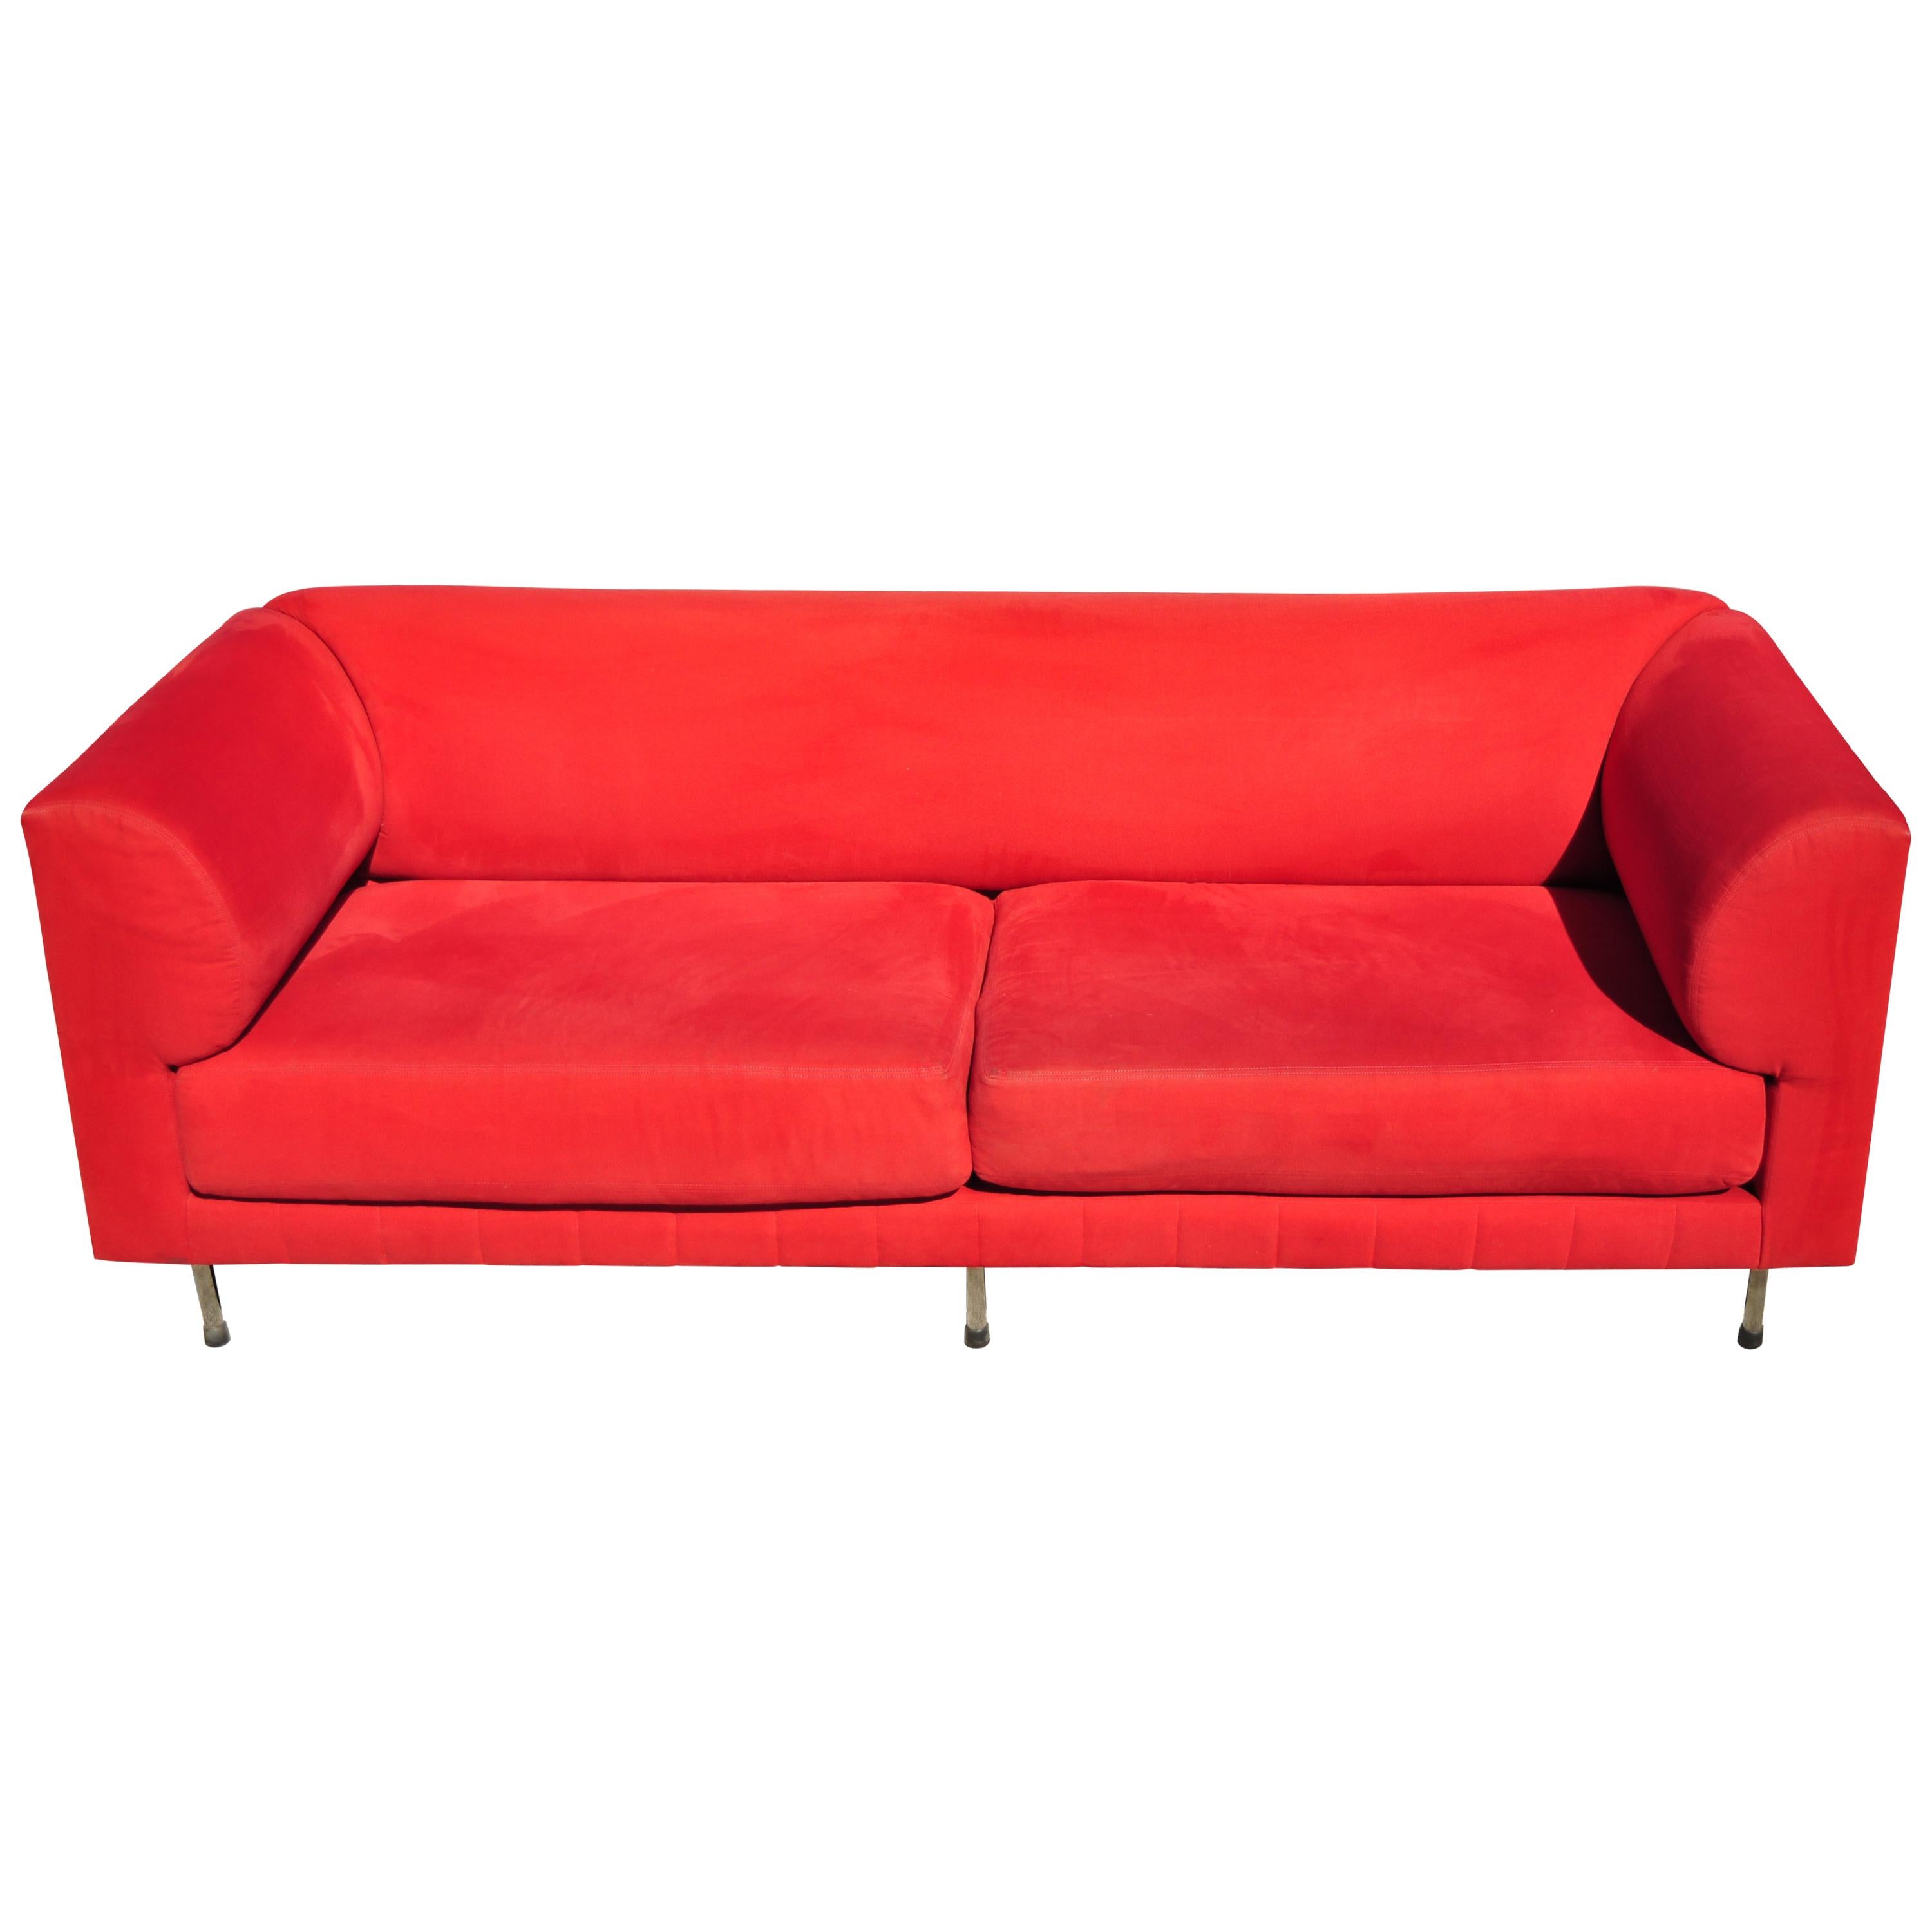 Larry Laslo for Directional Red Modern Italian Bauhaus Style Chrome Leg Sofa For Sale